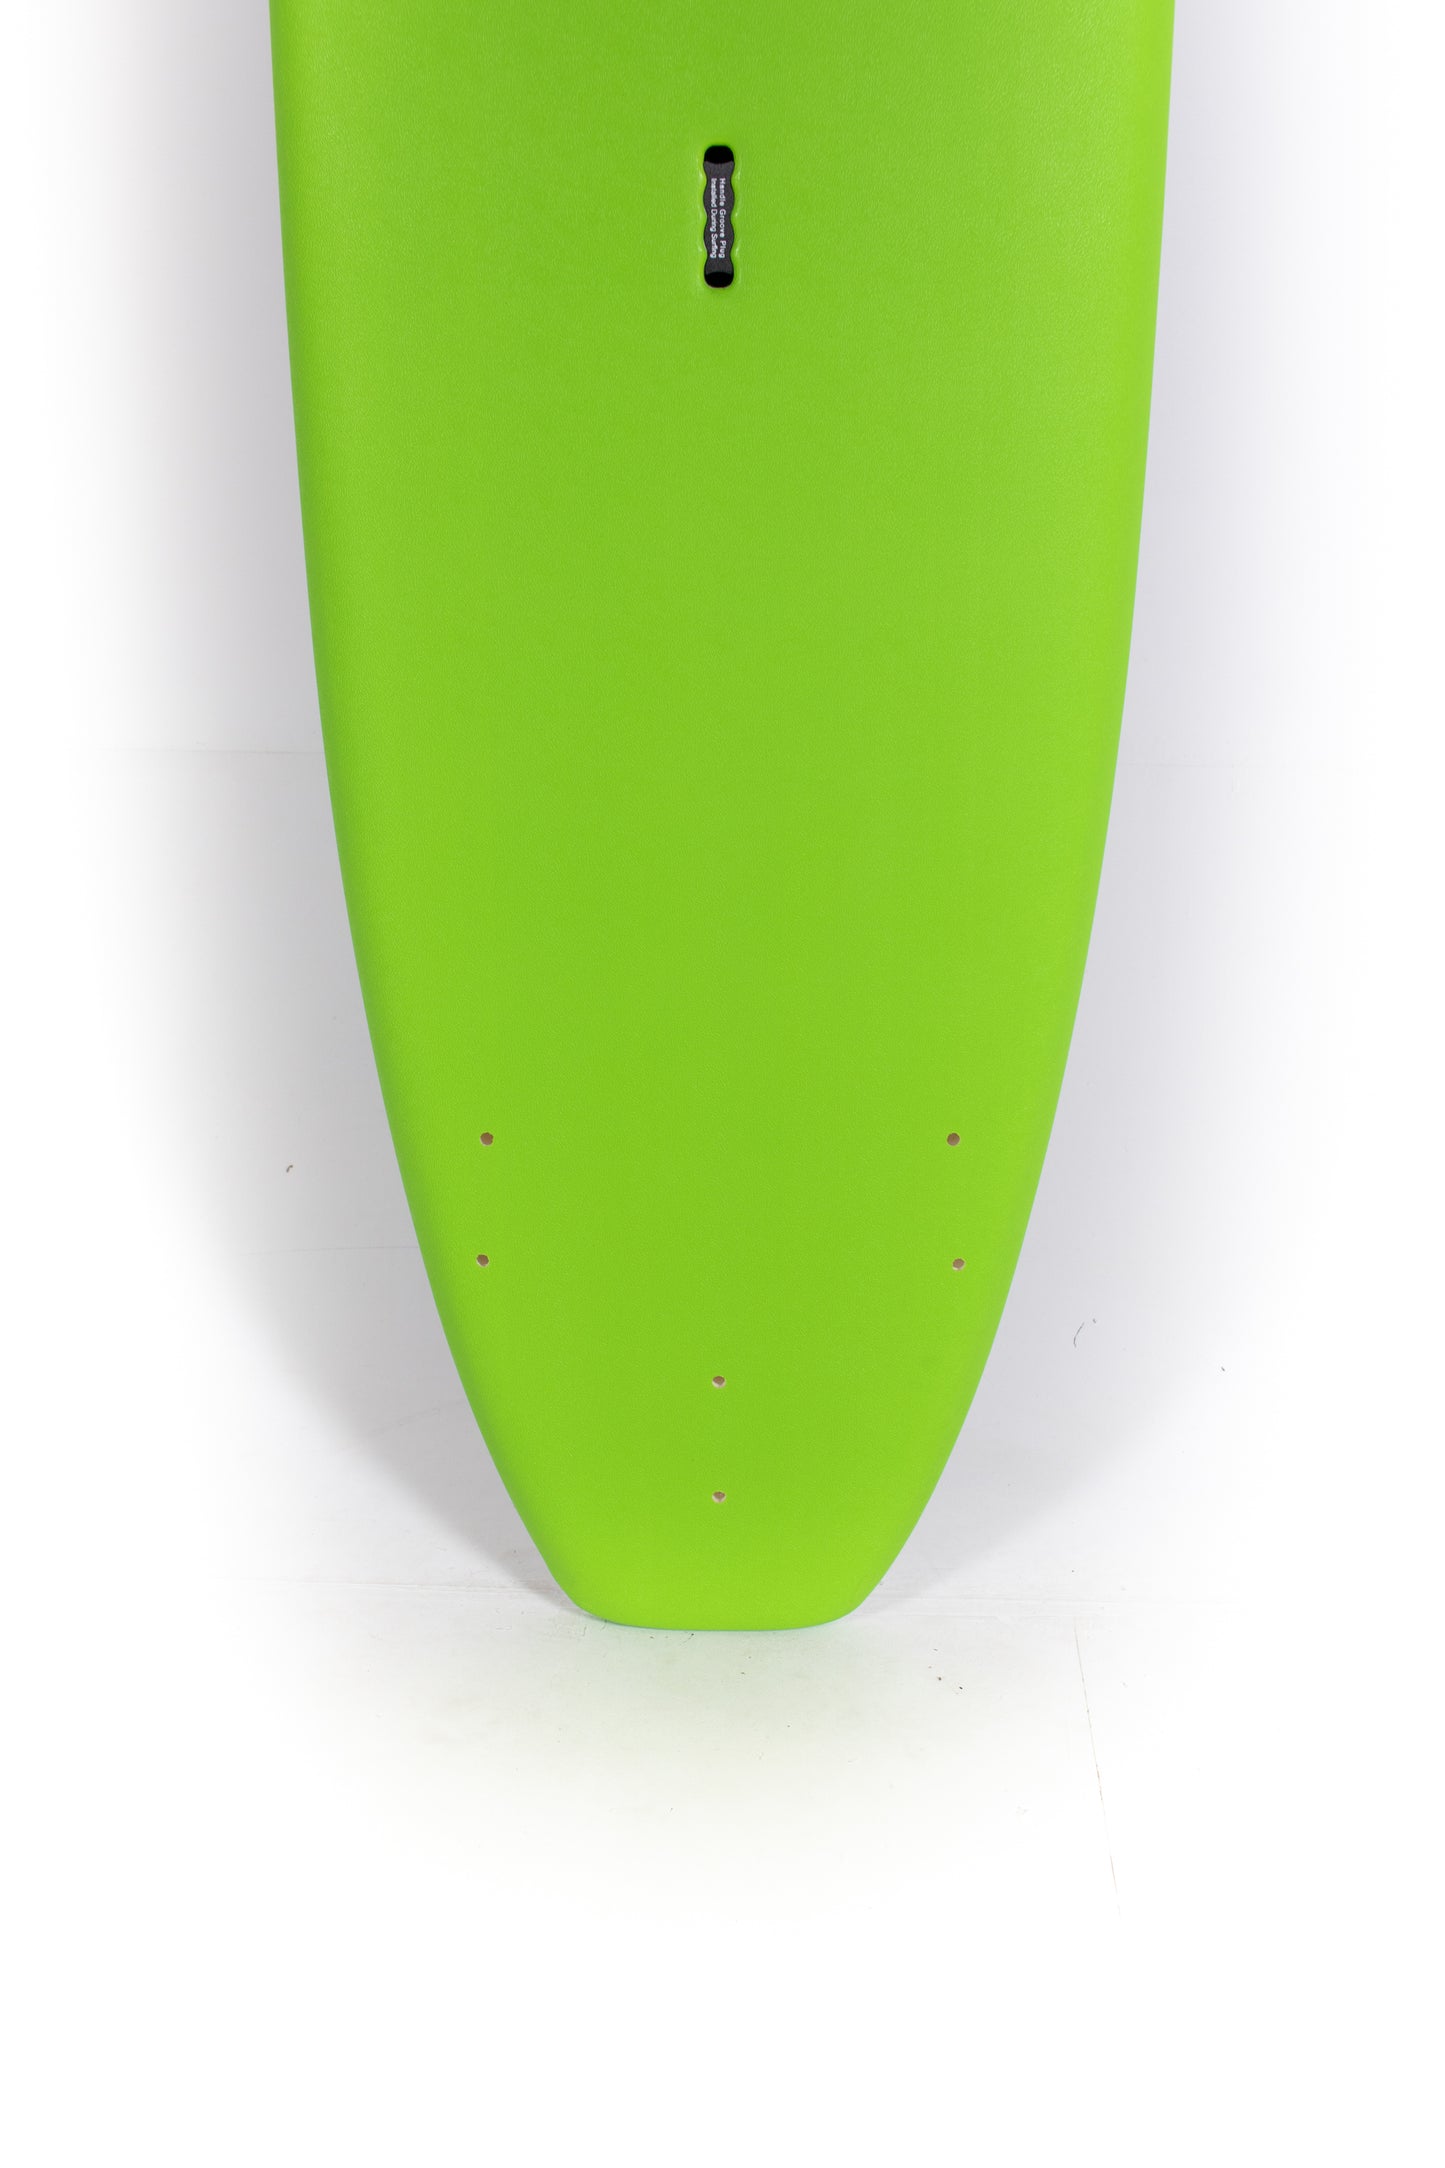 
                  
                    Pukas Surf Shop - INDIO - EASY RIDER -  8'0" x 26 1/8  x 4 - 95L
                  
                